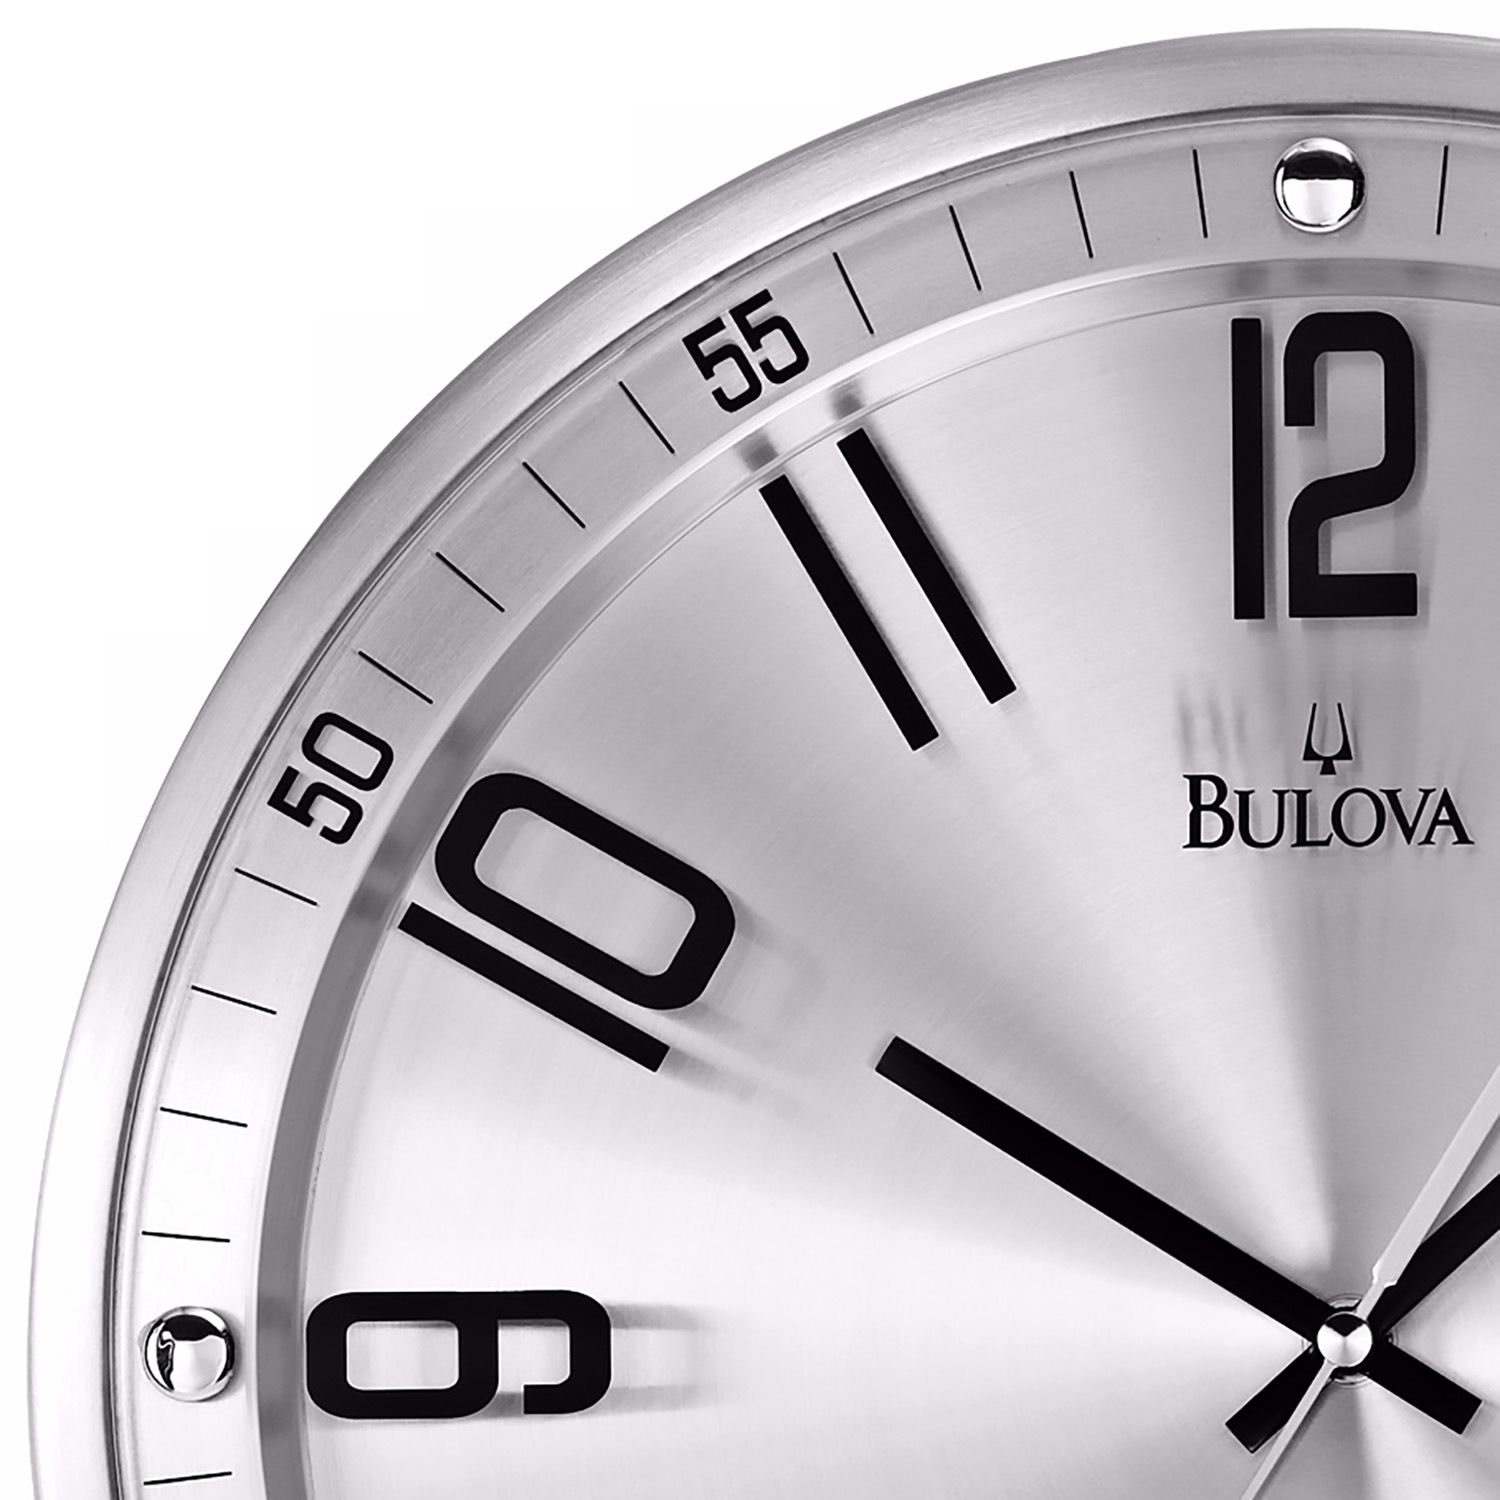 C4646 Bulova Wall Watch